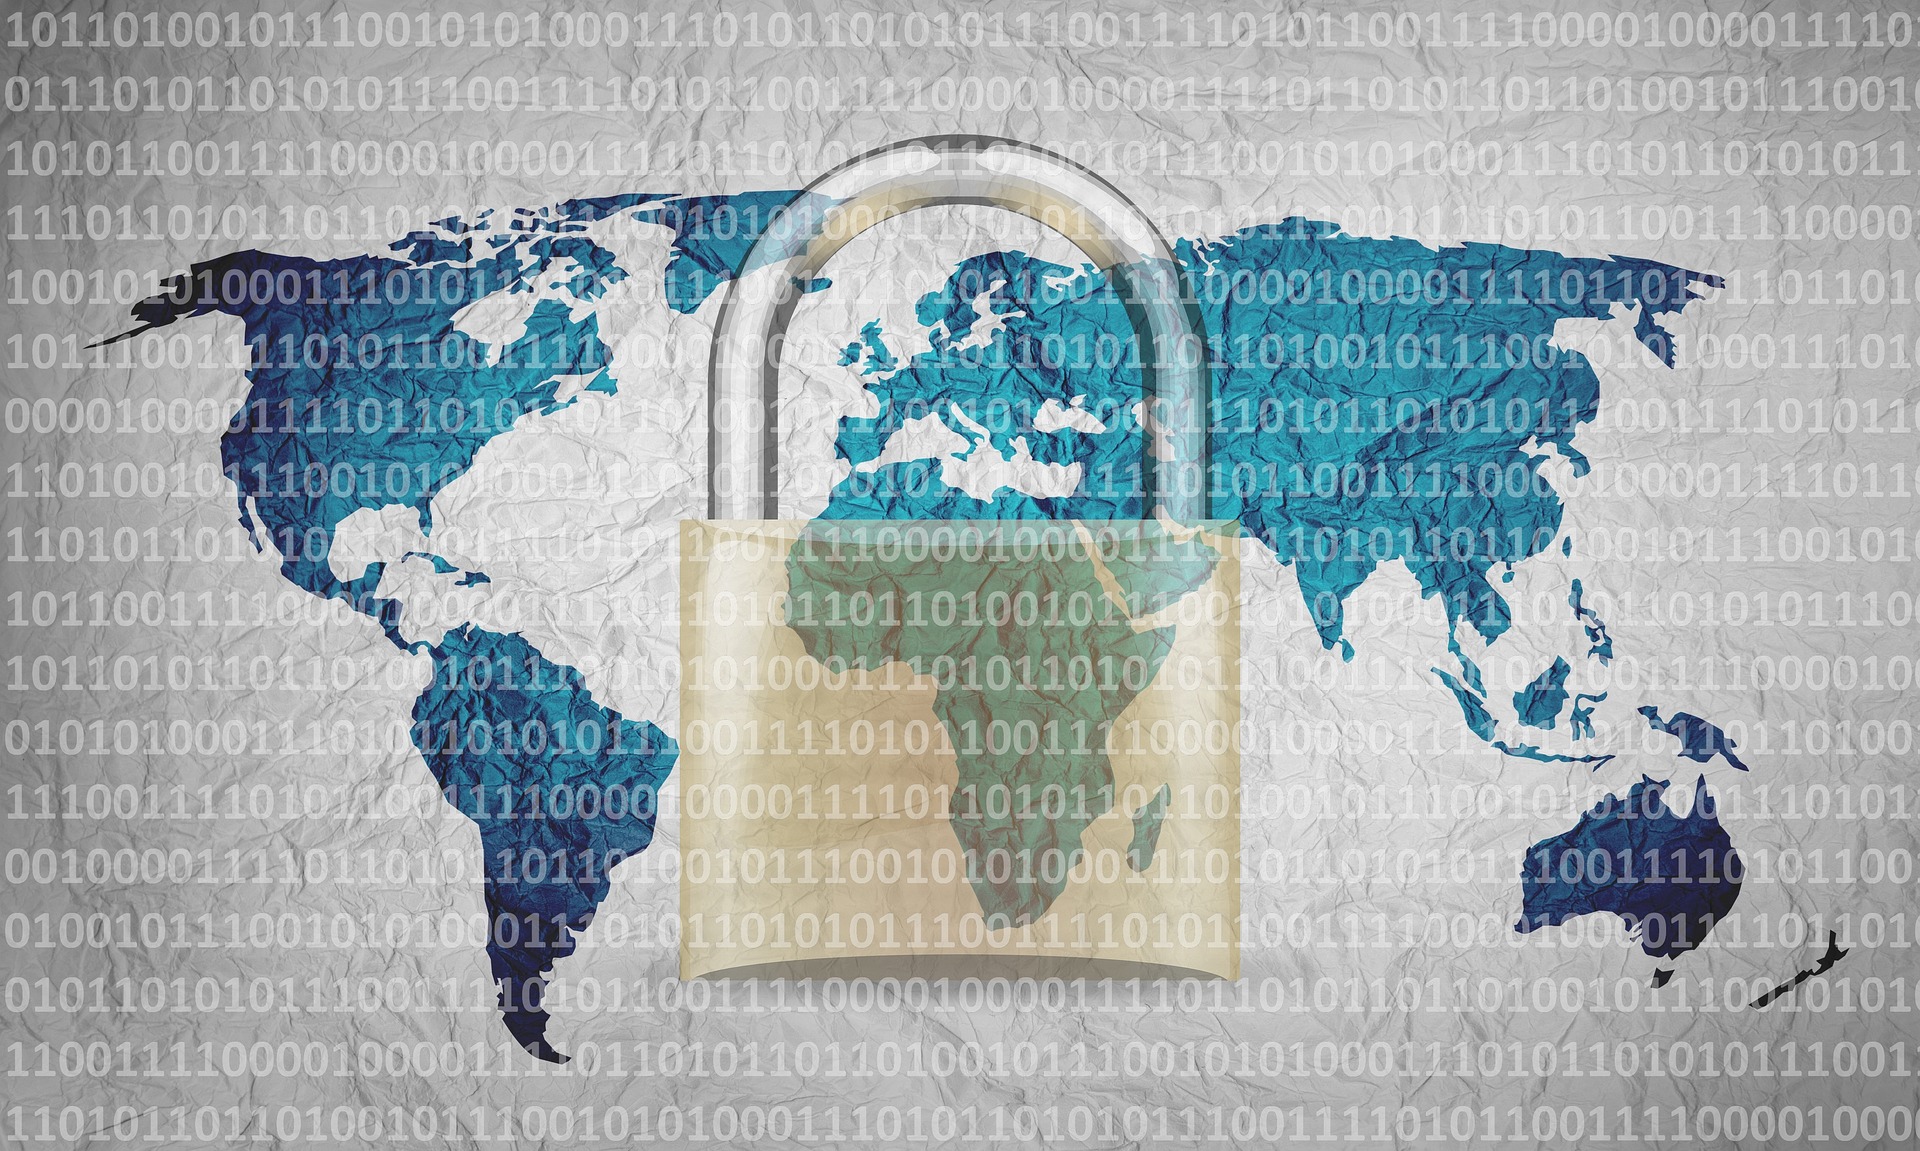 cybersecurity data breach